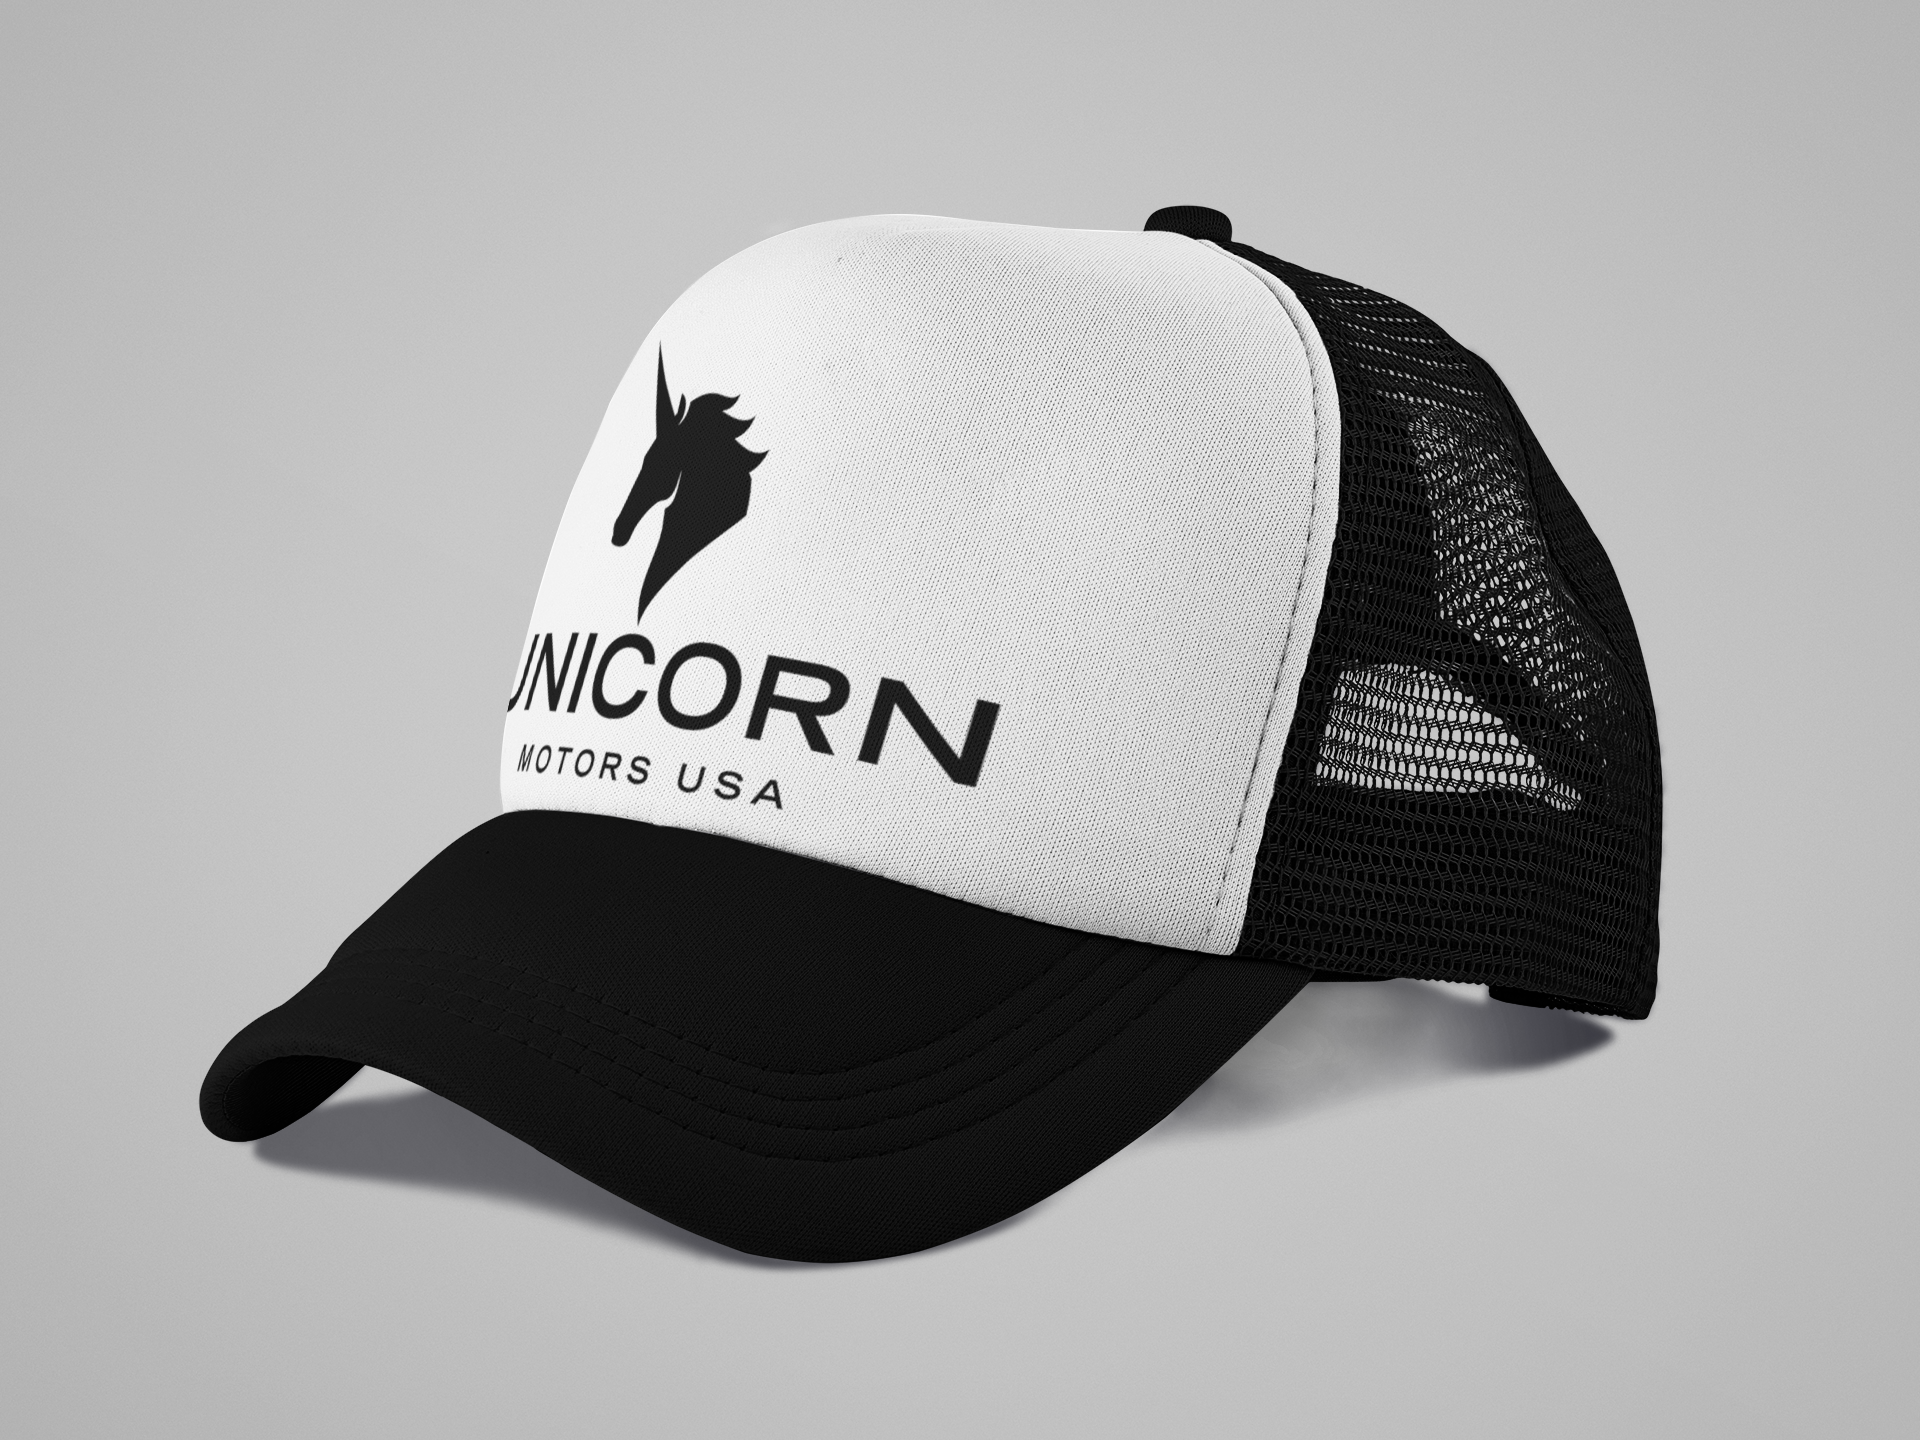 Download Unicorn Trucker Hat - Unicorn Motors USA